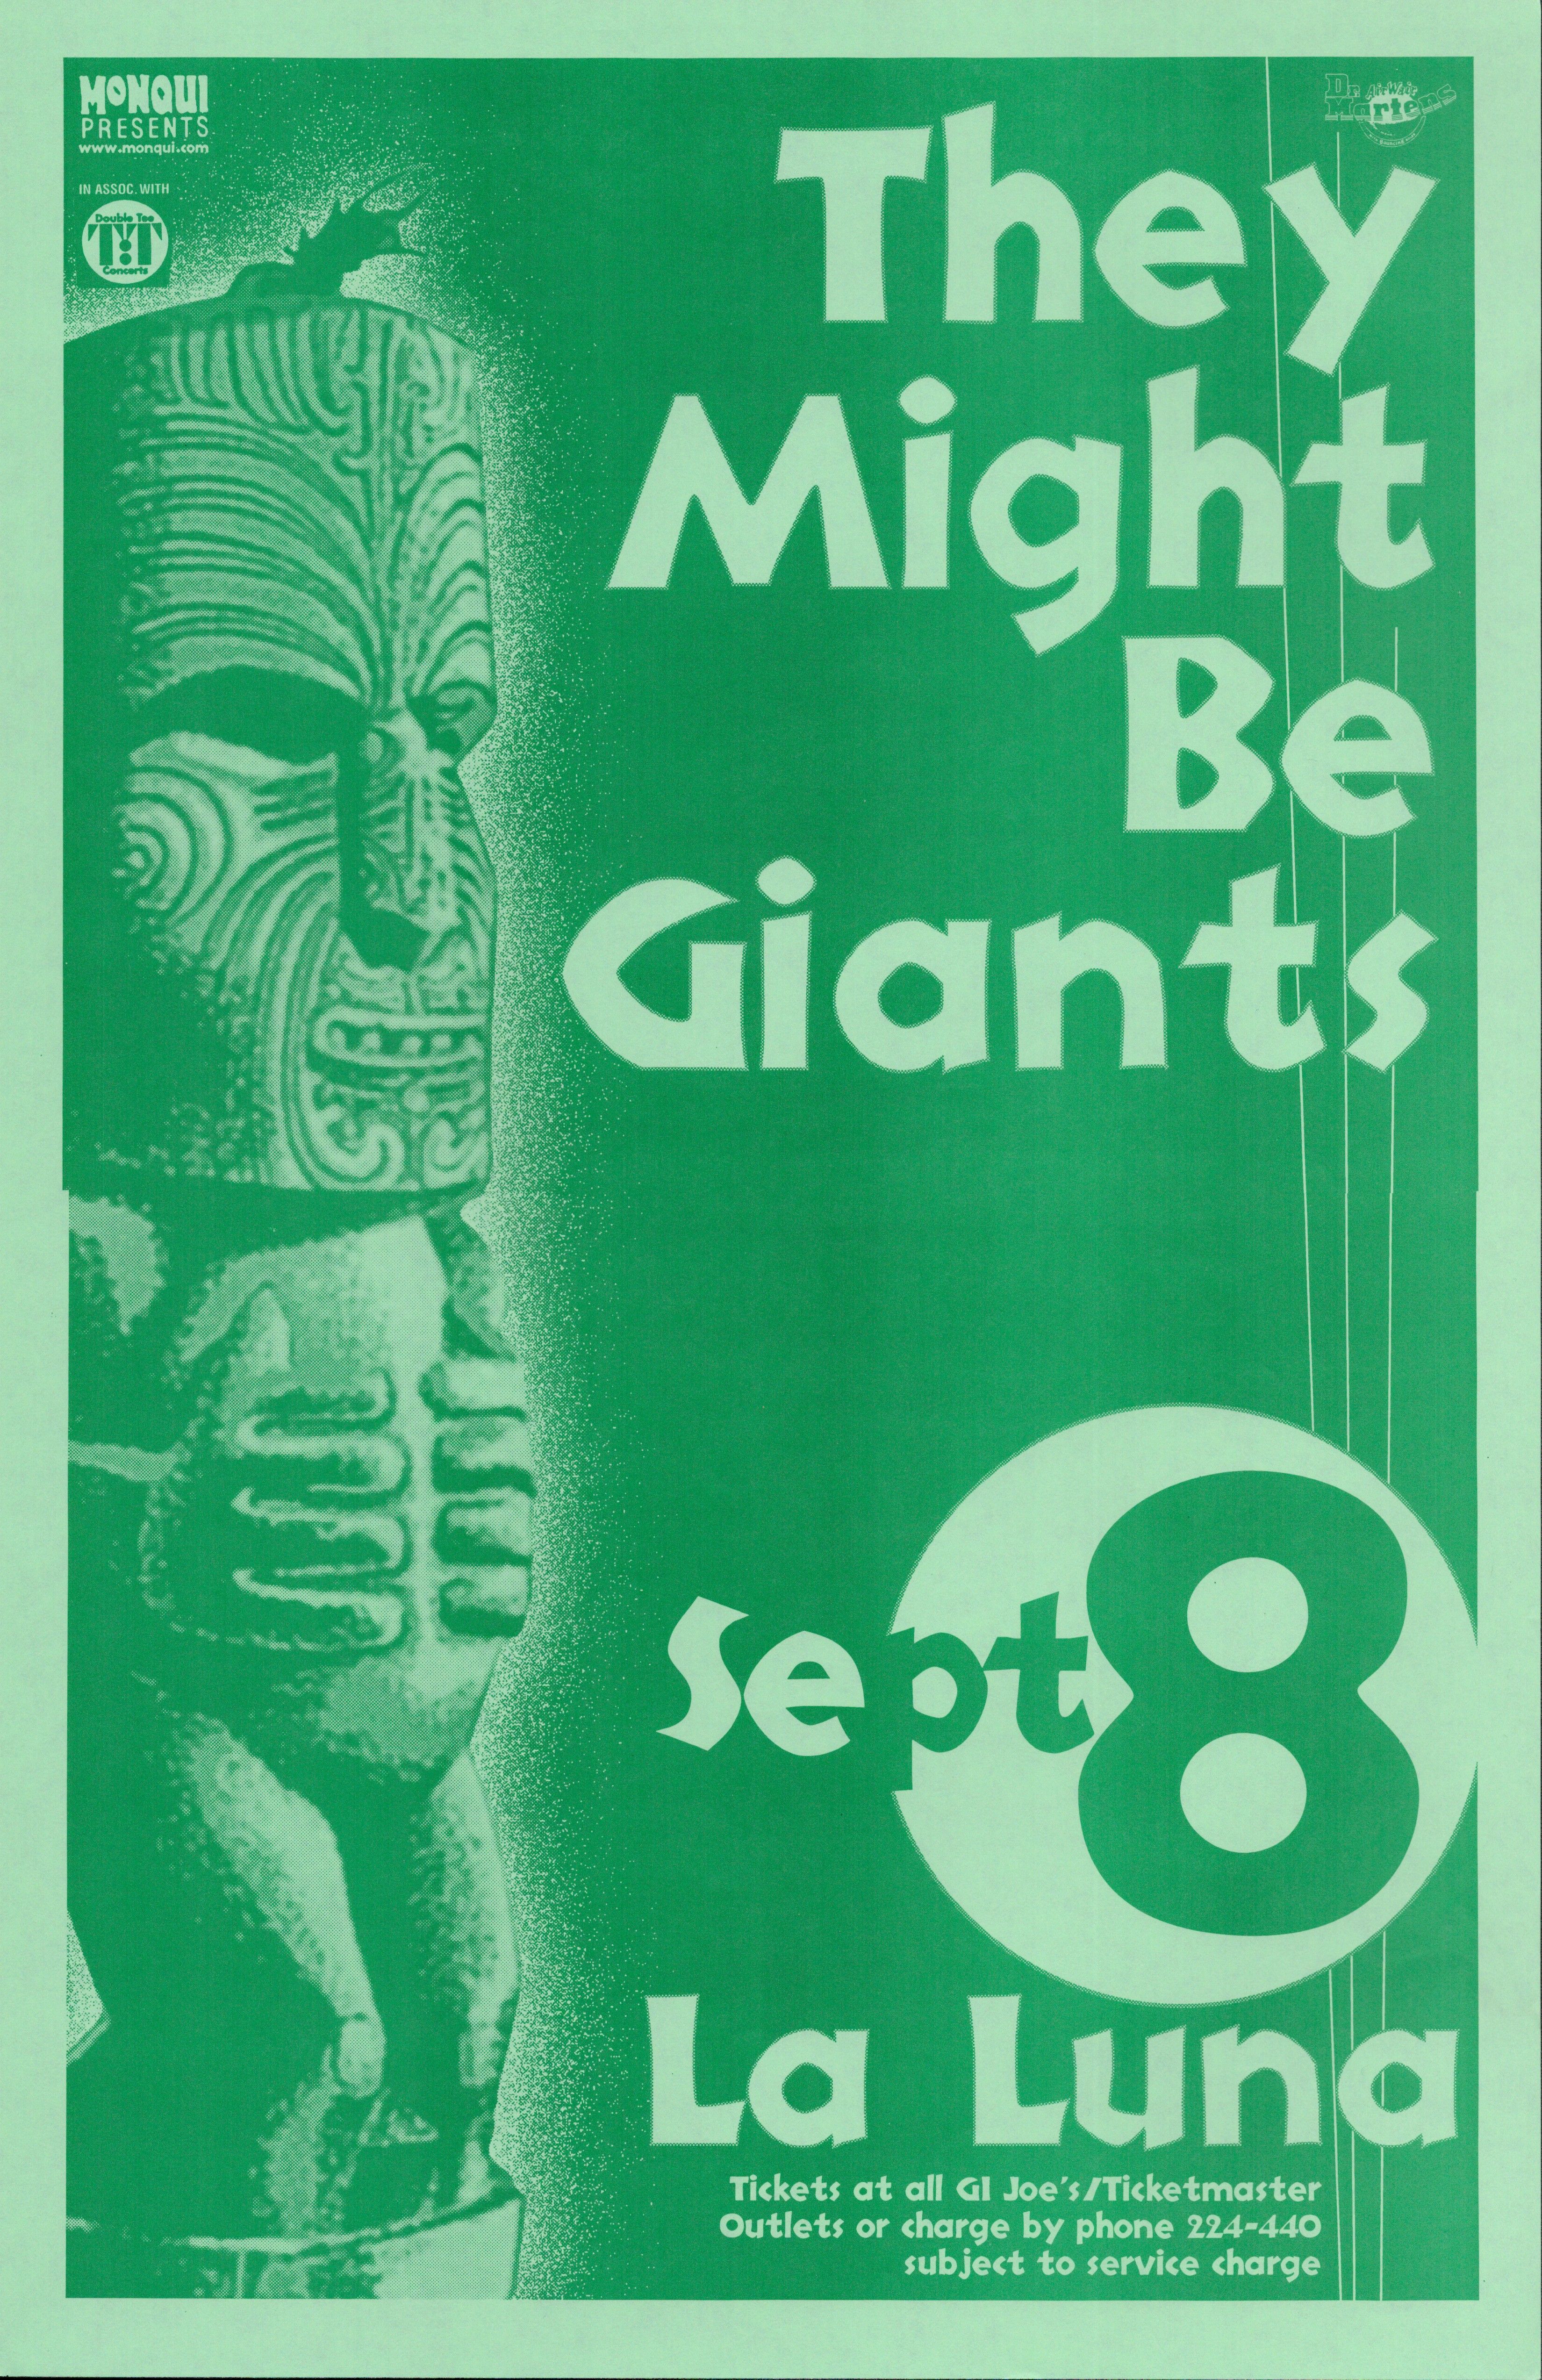 MXP-213.4 They Might Be Giants La Luna 1998 Concert Poster